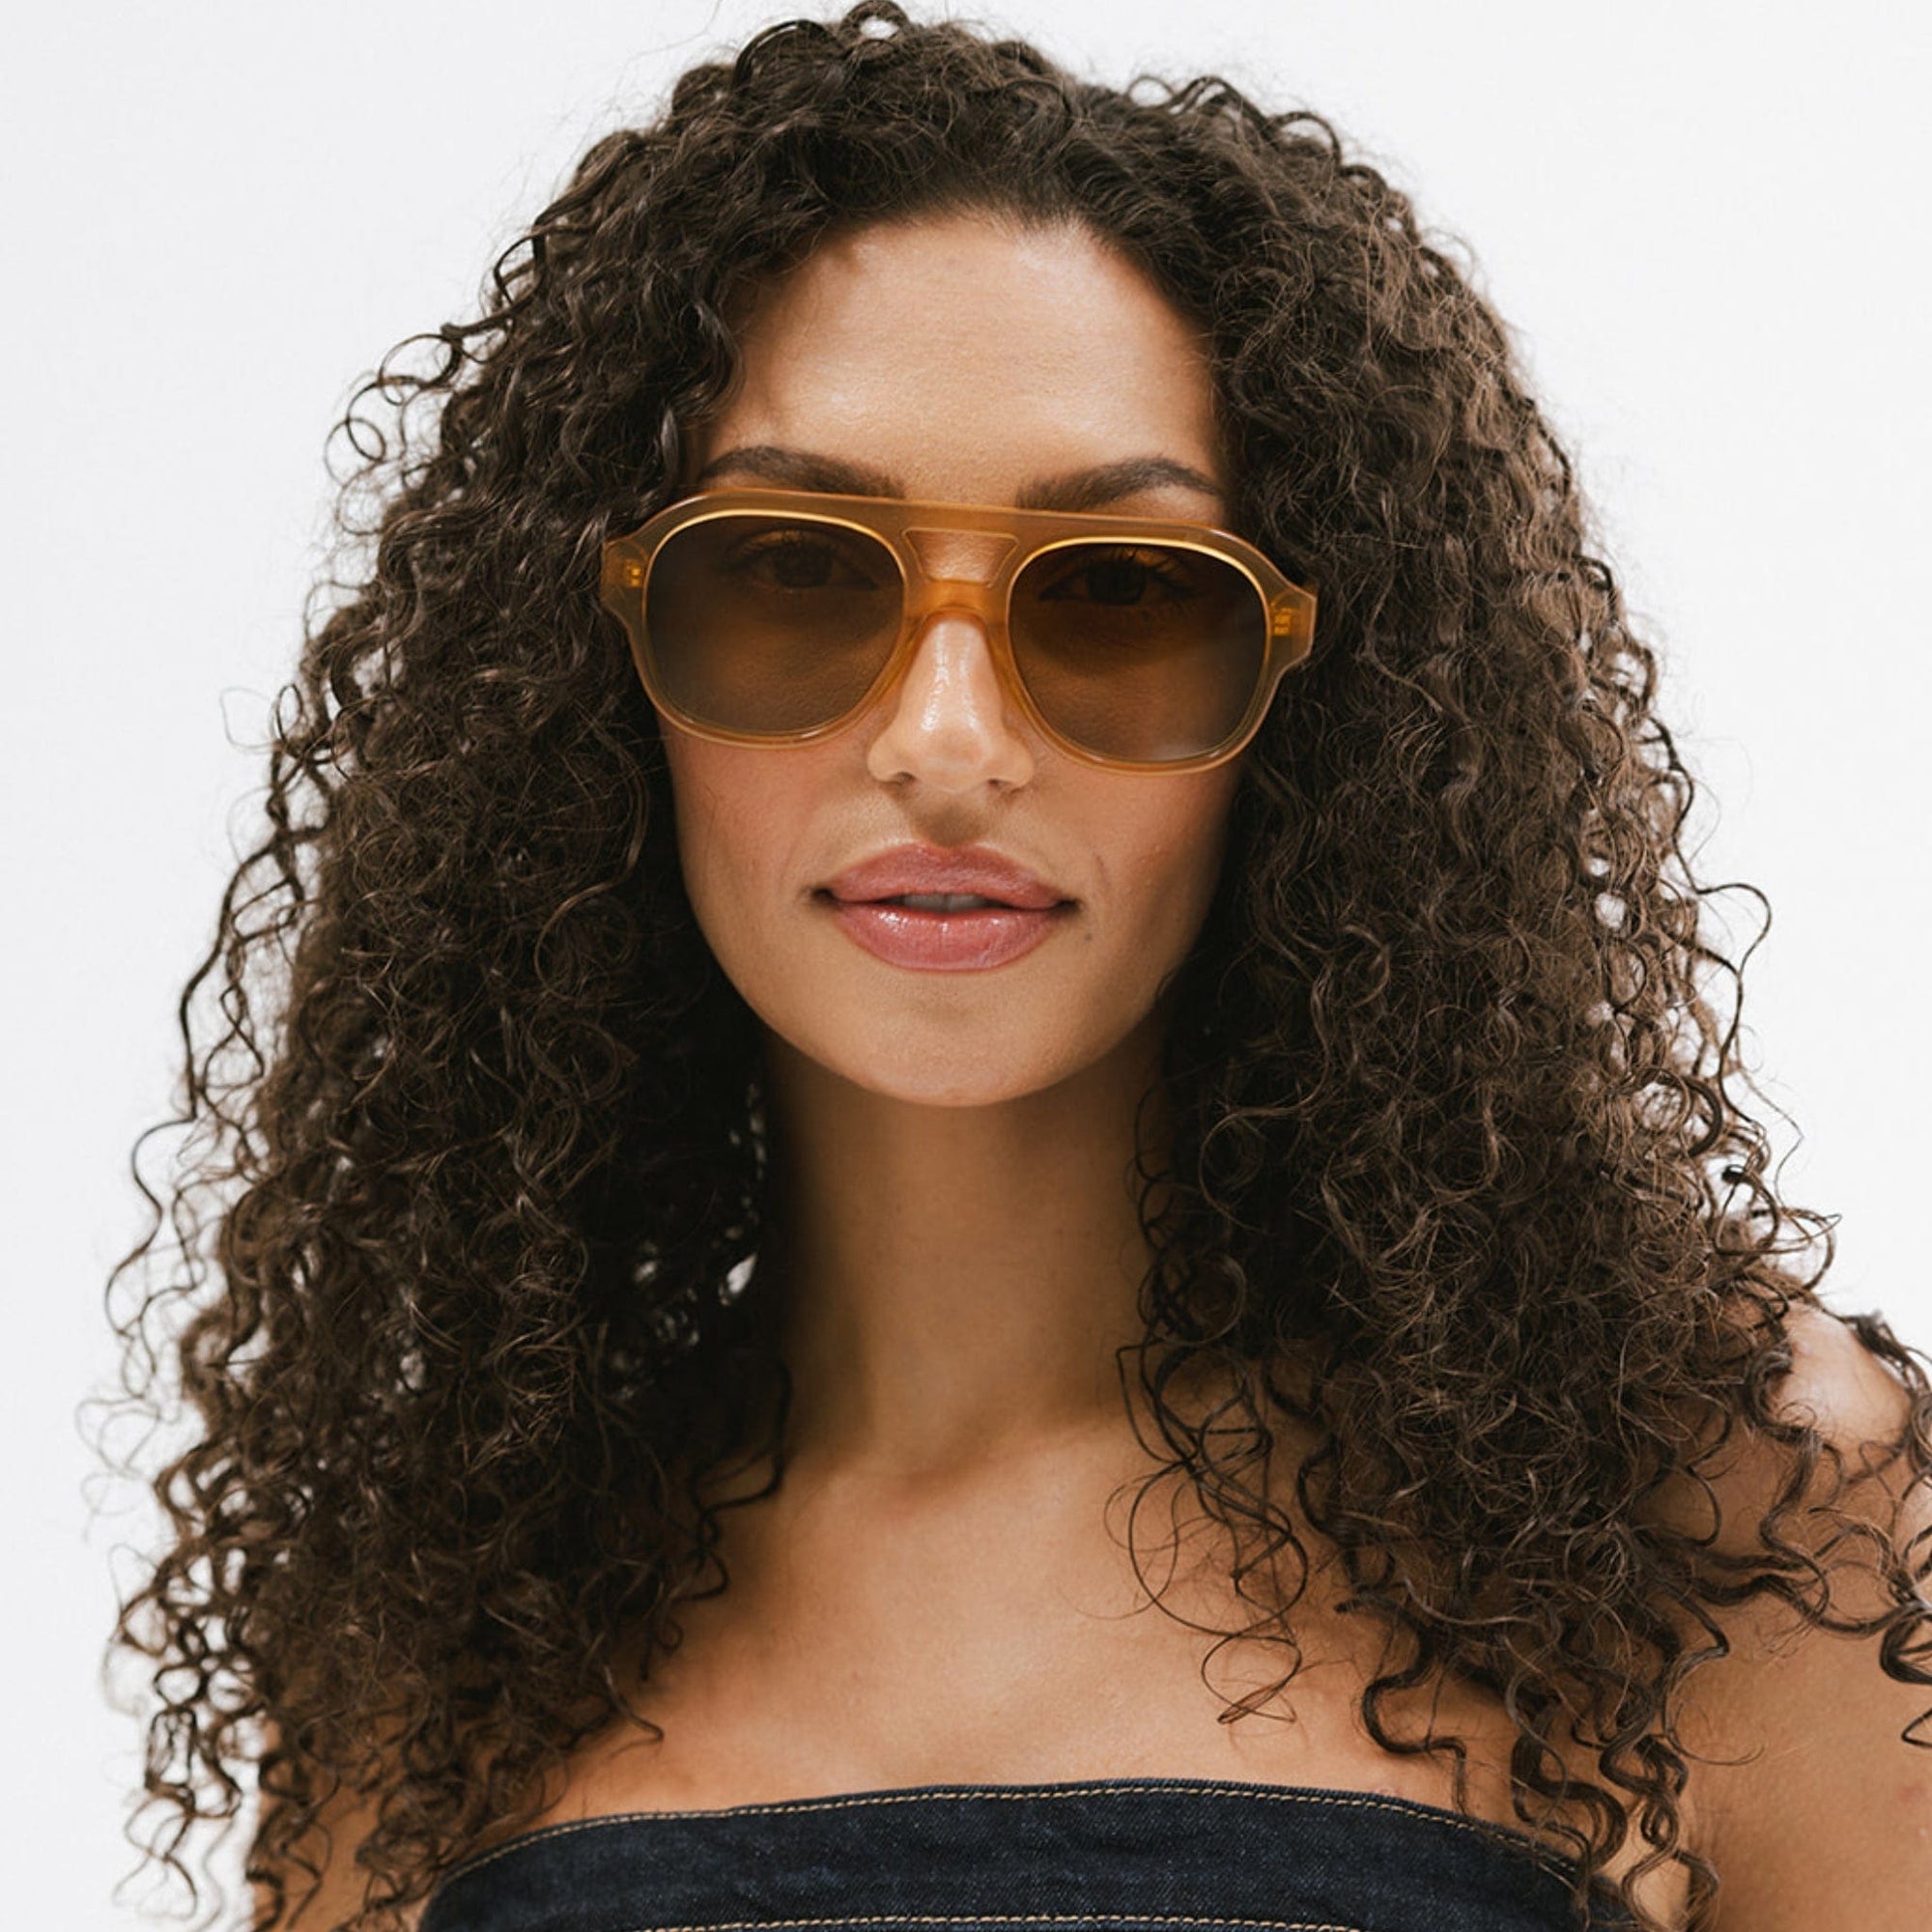 Gigi Pip sunglasses for women - Goldie Aviator Sunglasses - aviator style women's sunglasses with tri-acetate cellulose polarized lenses [honey]